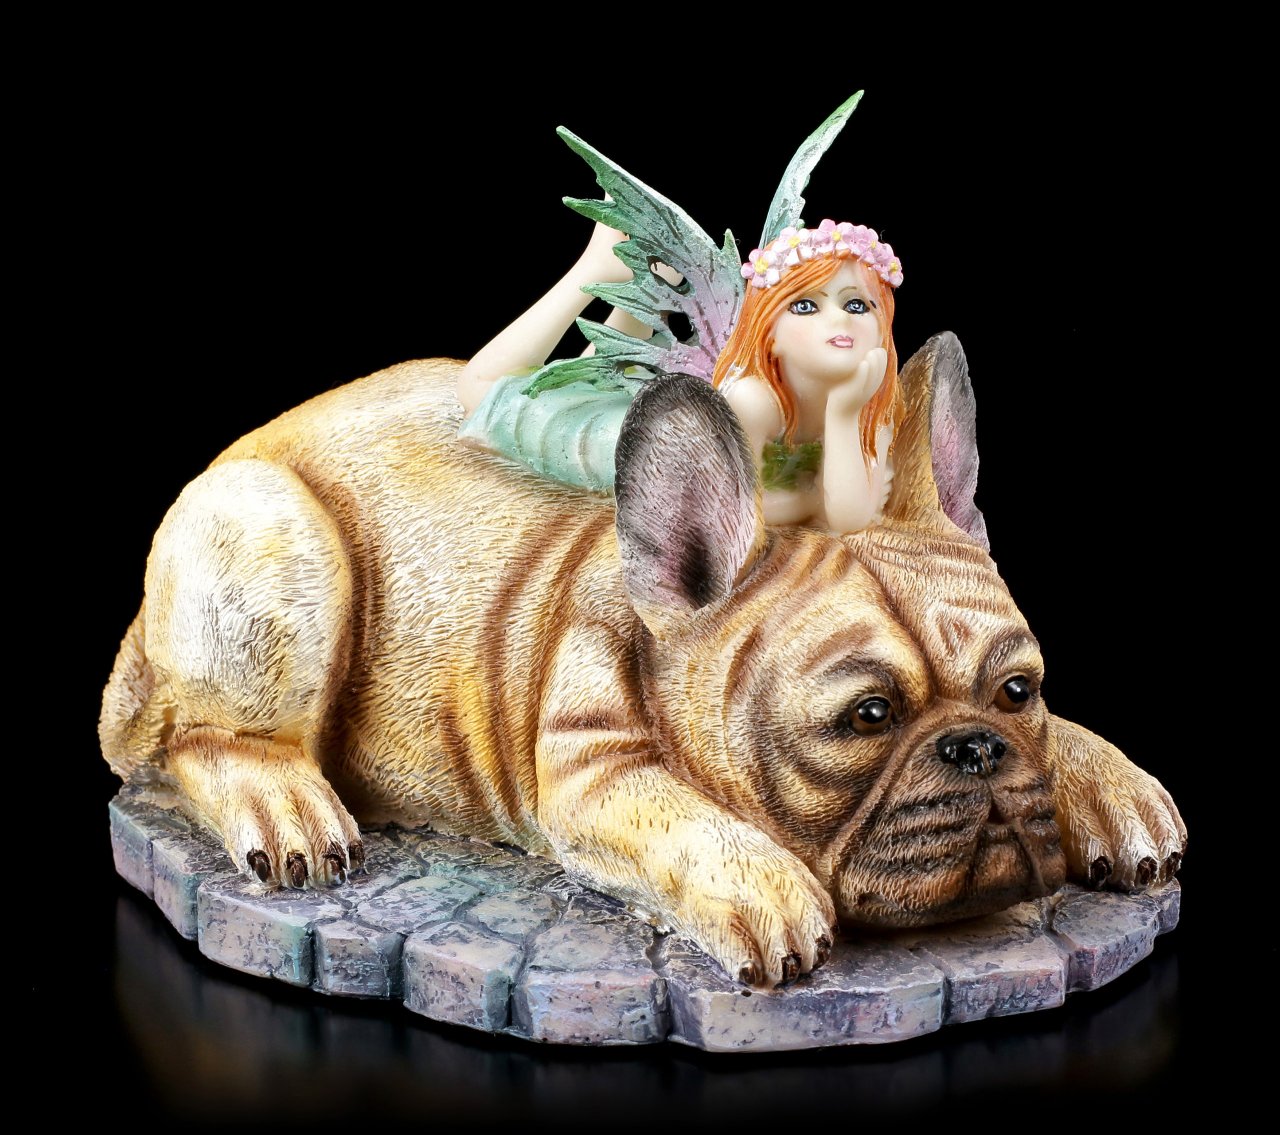 Fairy Figurine on French Bulldog - Canine Companion